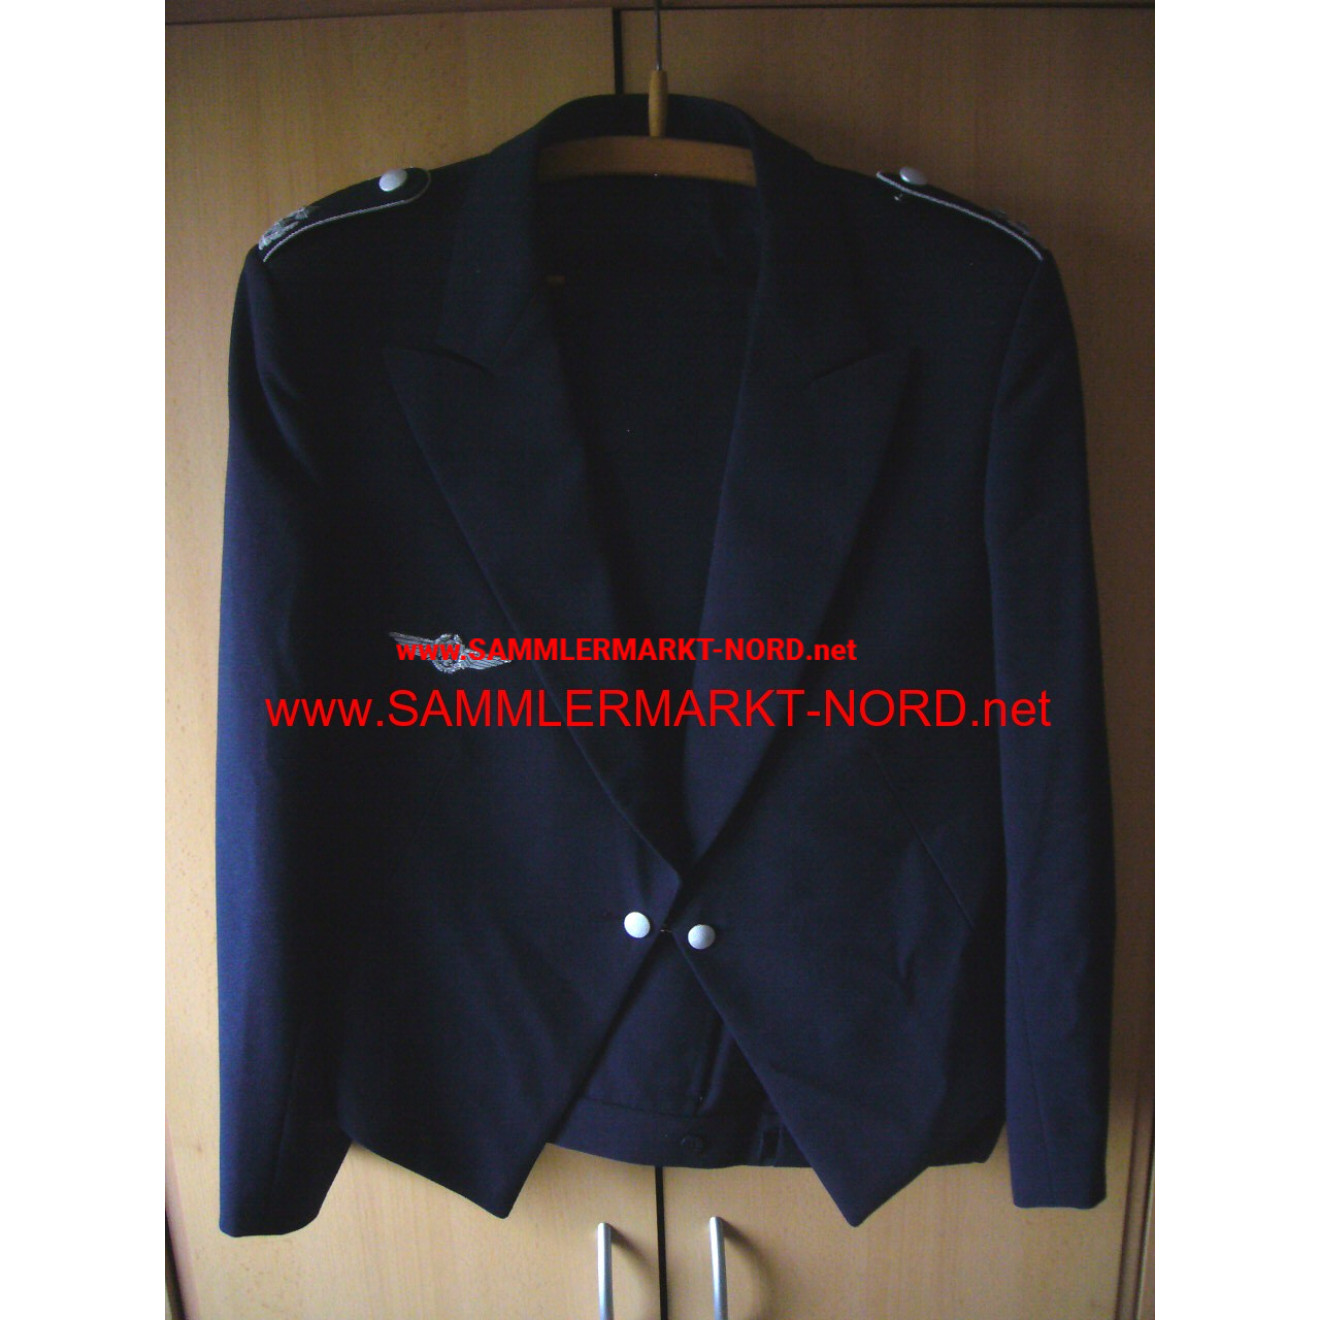 Bundesluftwaffe - early gala uniform of an officer - Short Jacke